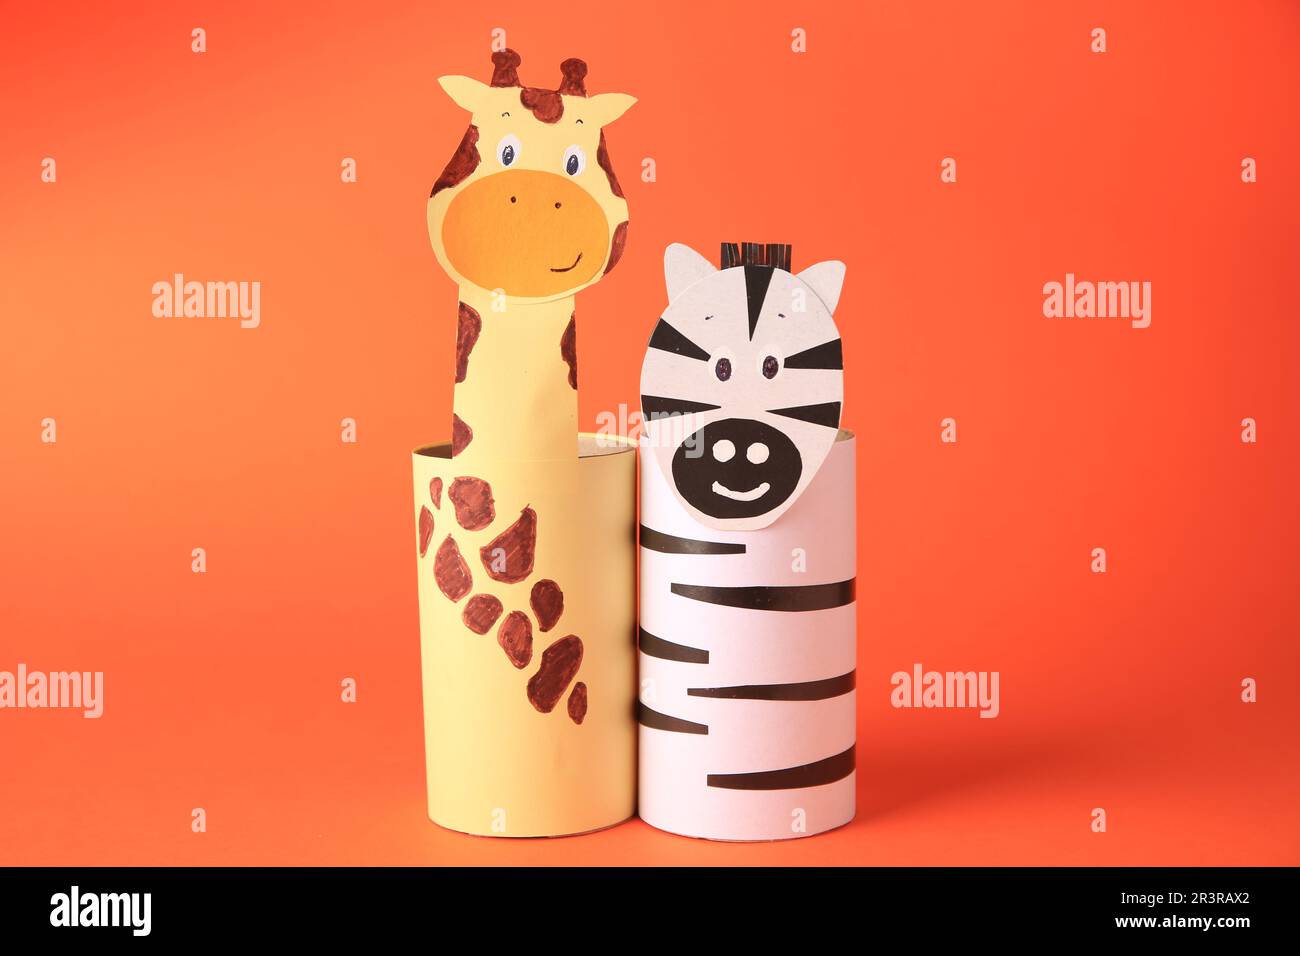 Toy giraffe and zebra made from toilet paper hubs on orange background. Children's handmade ideas Stock Photo